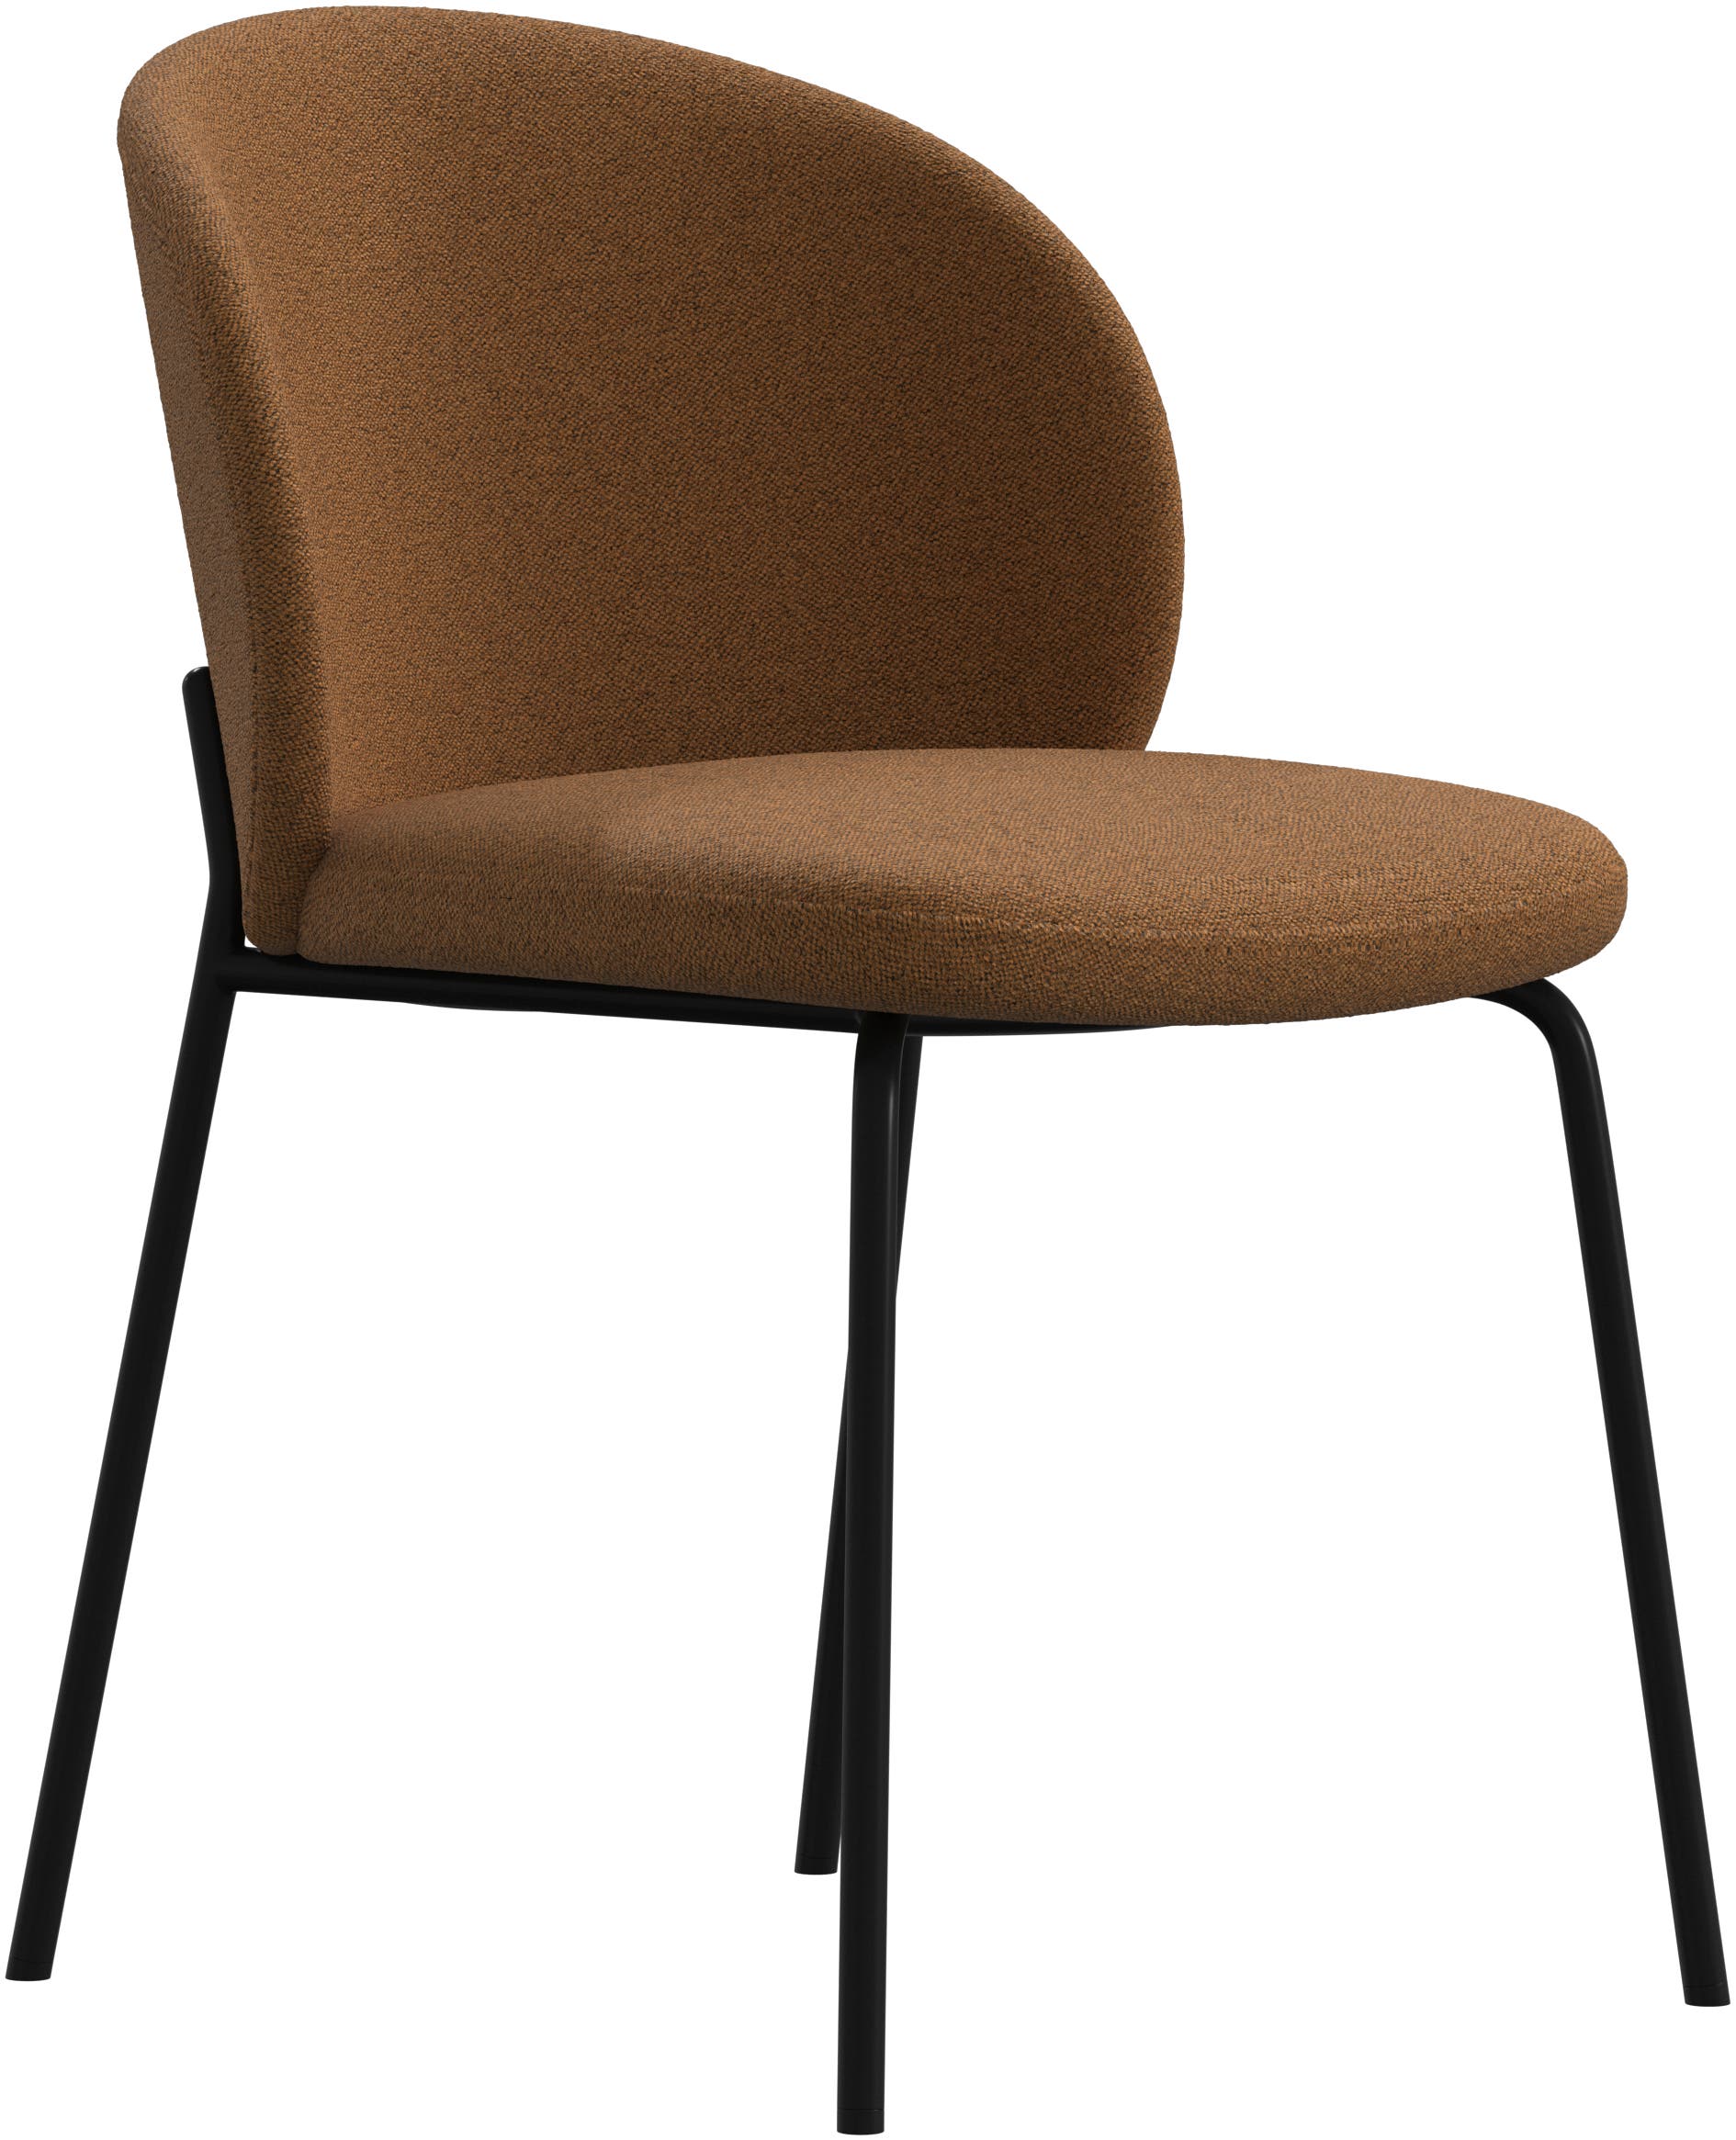 The Princeton chair | Danish furniture design | BoConcept